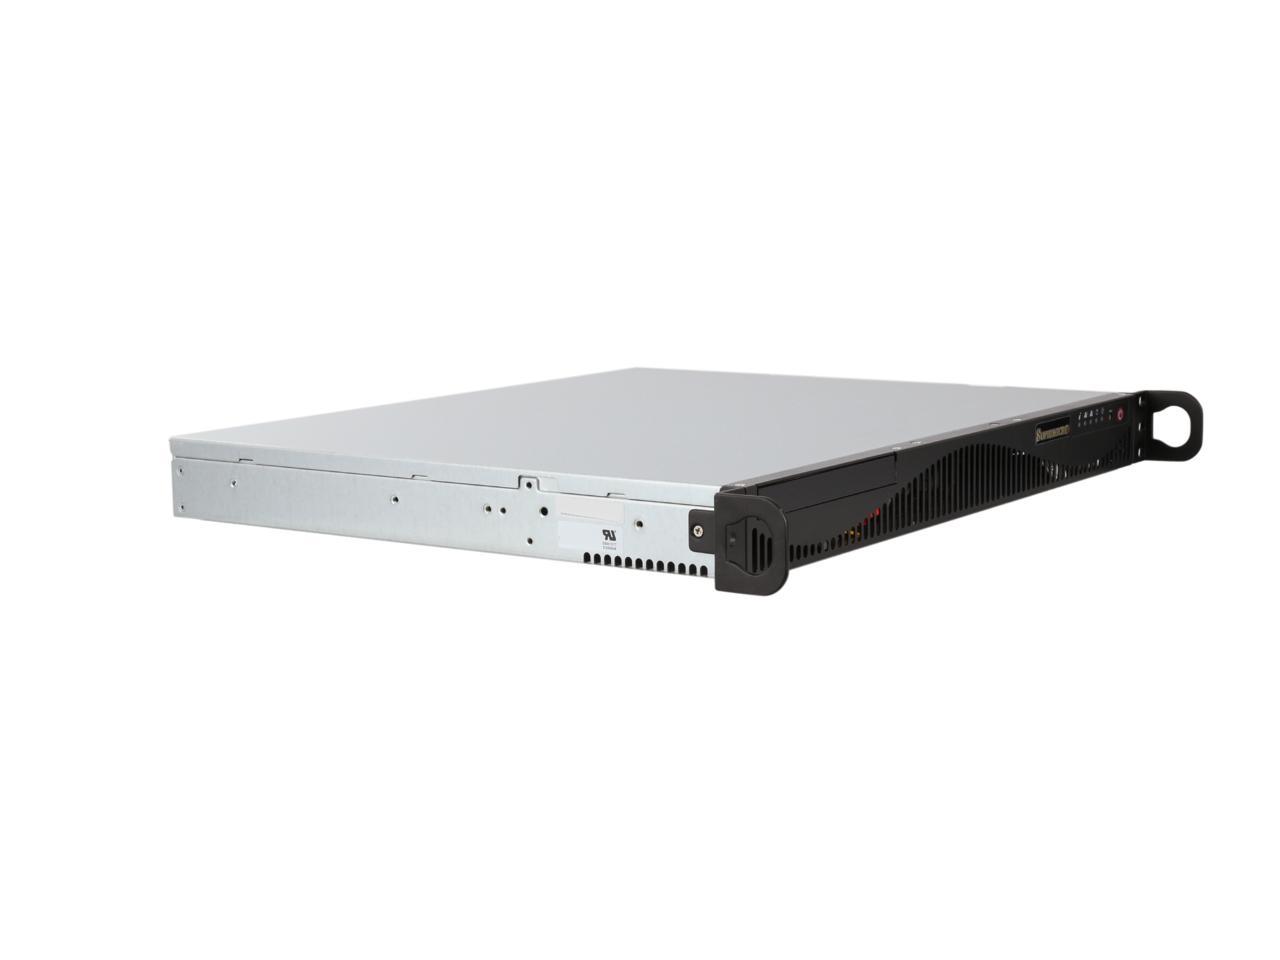 SUPERMICRO SYS-5019S-ML 1U Rackmount Server Barebone LGA 1151 Intel C236  DDR4 2400 / 2133 / 1866 / 1600 MHz - Newegg.com